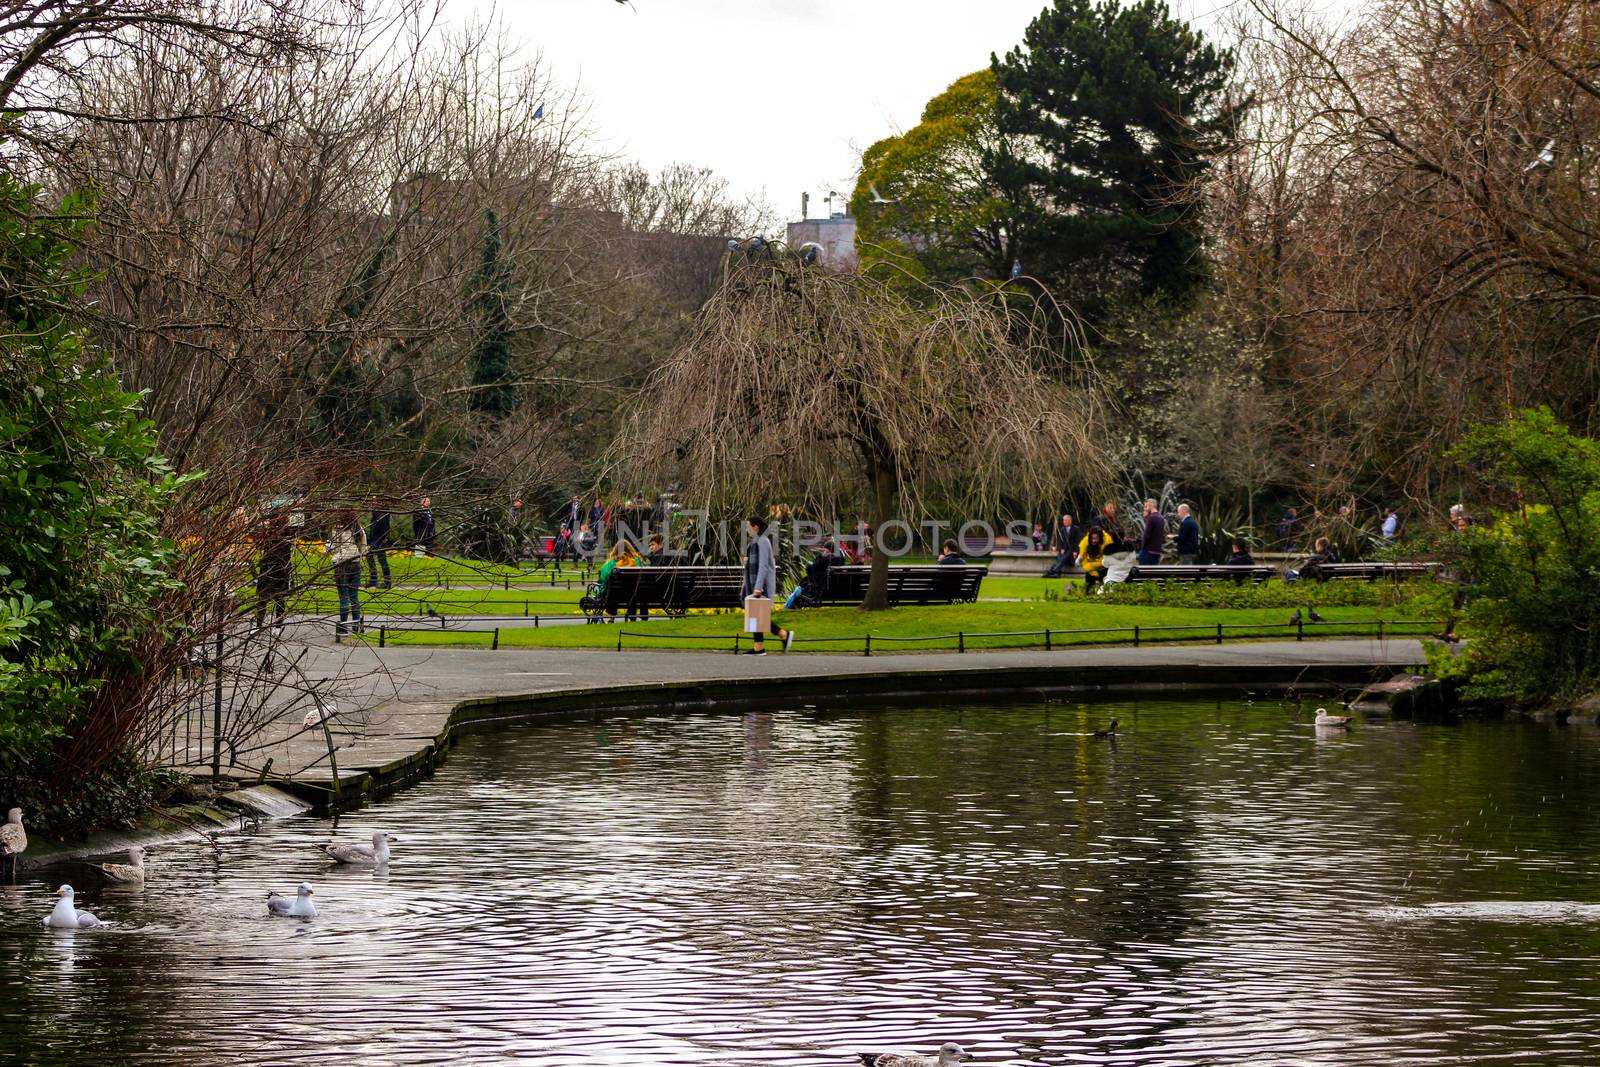 Bandstand in Stephen's Green Park Dublin by mynewturtle1